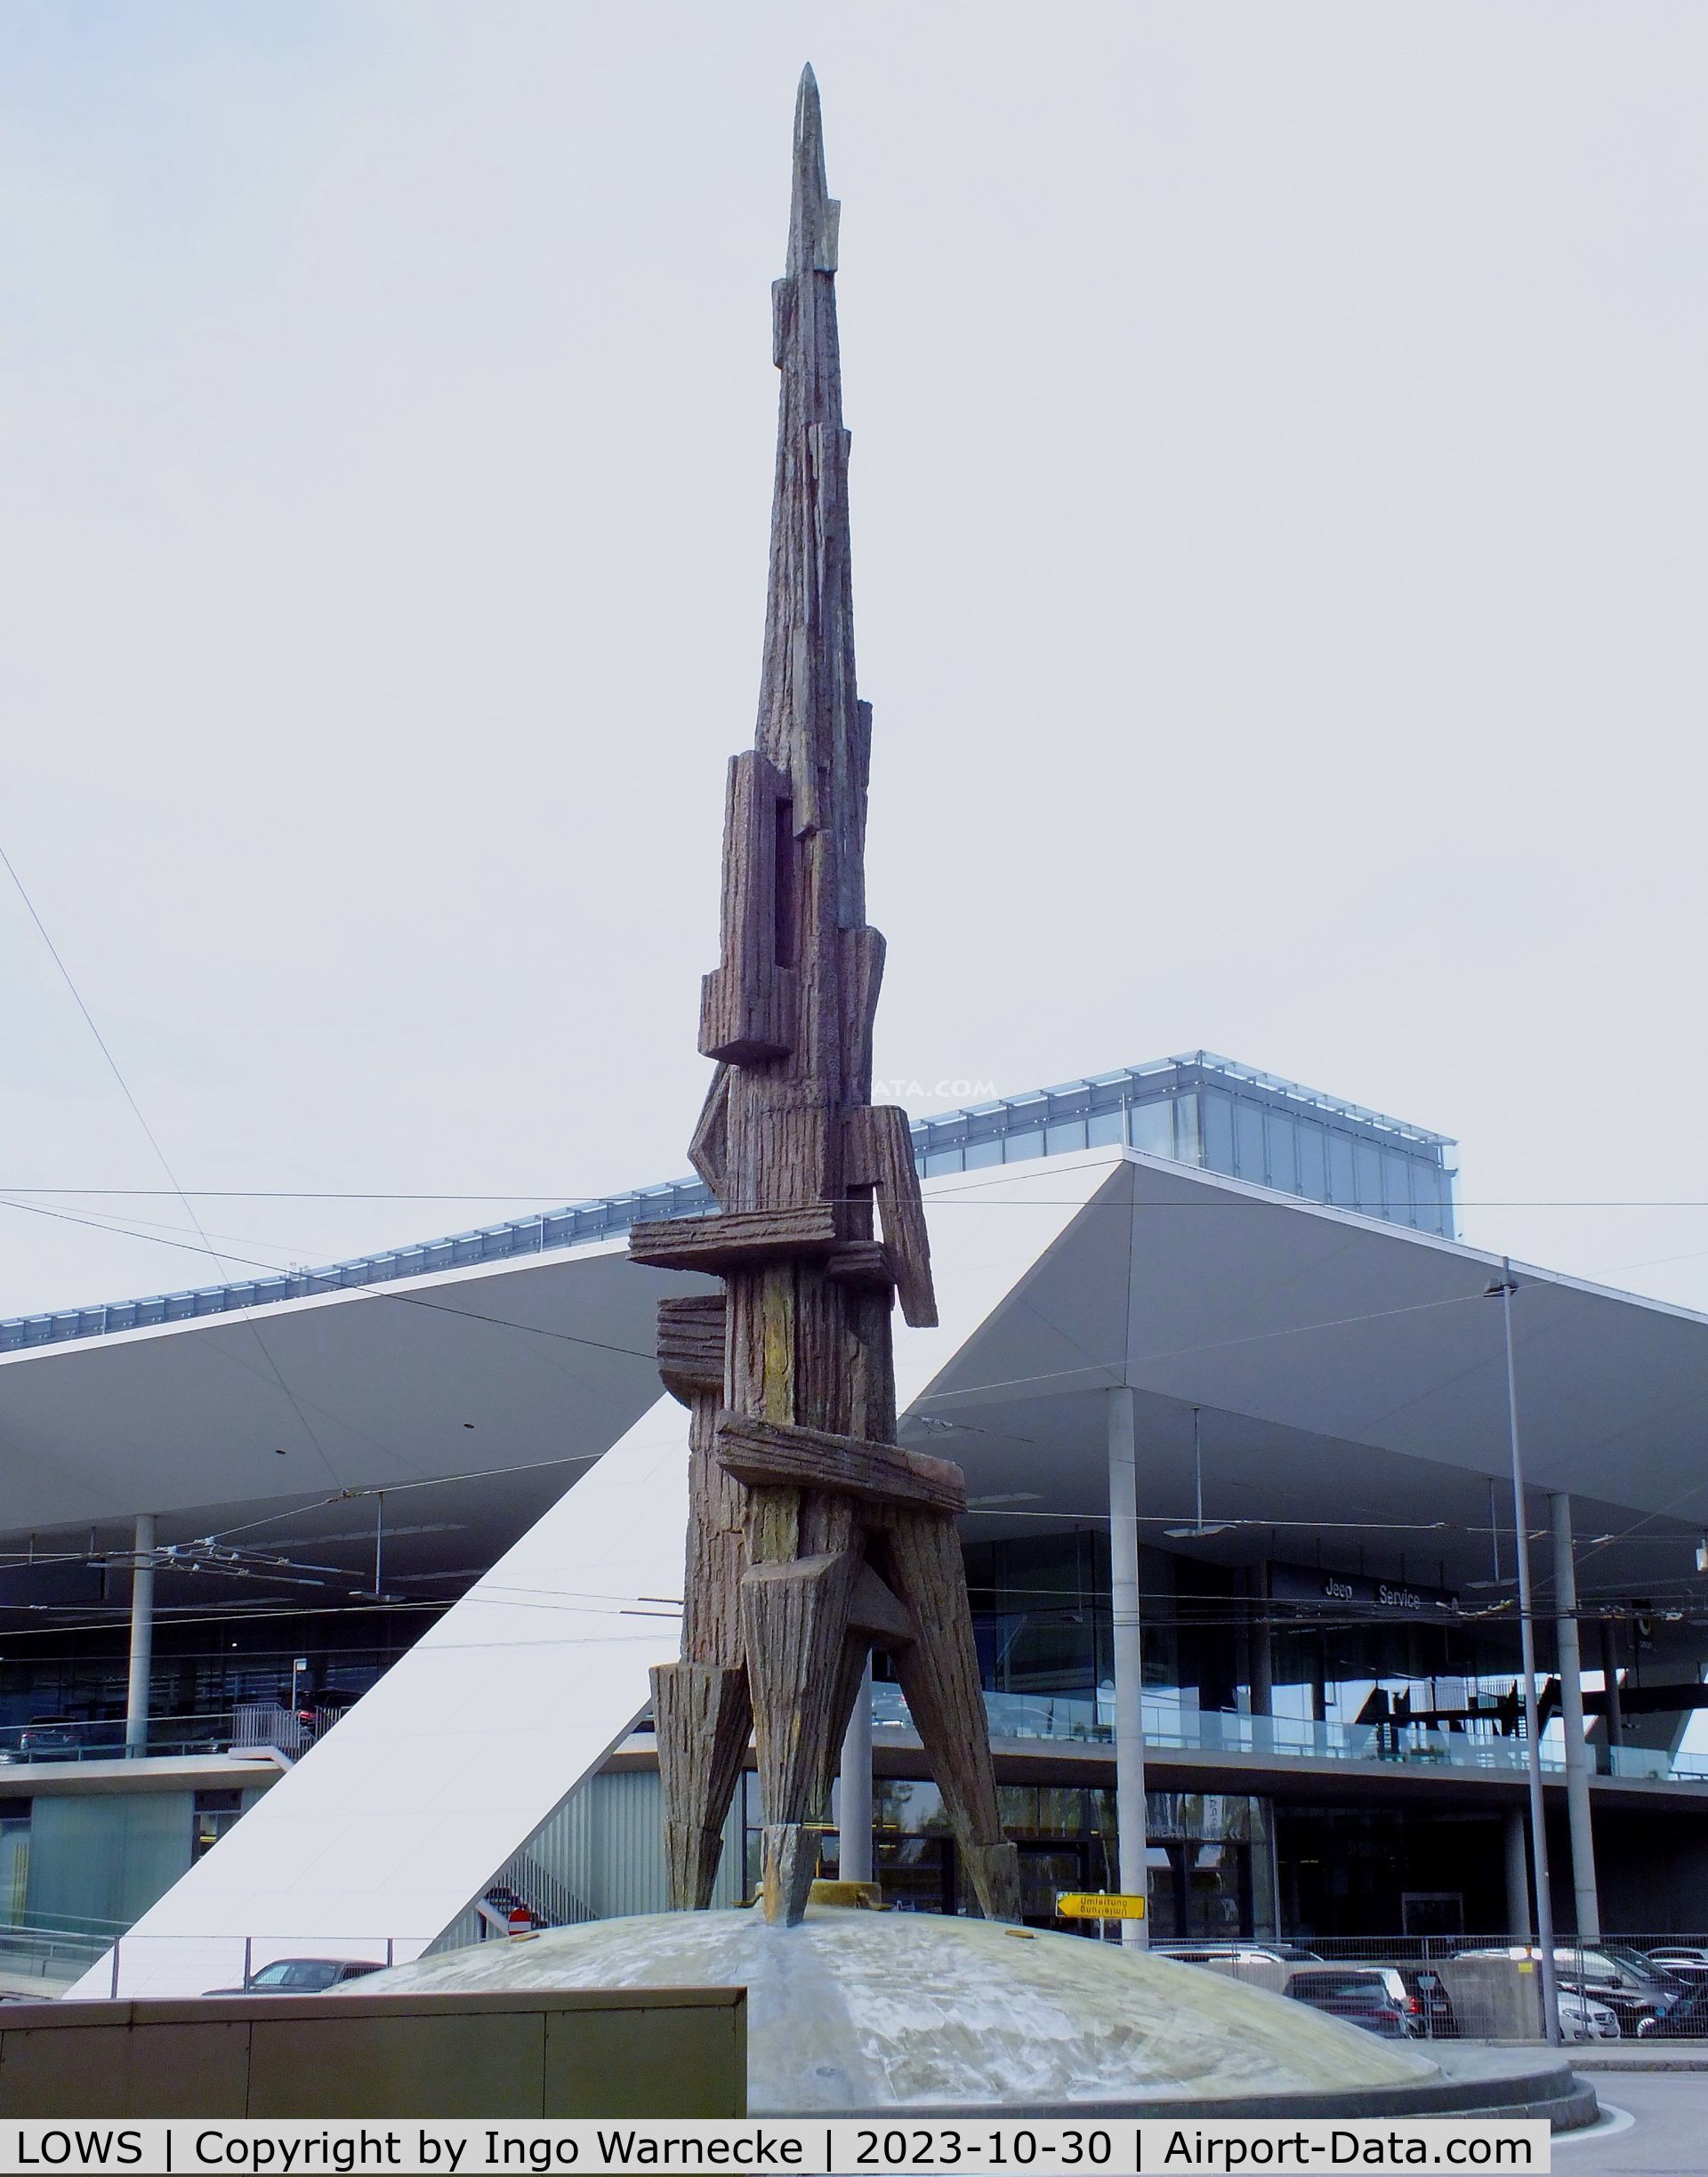 Salzburg Airport, Salzburg Austria (LOWS) - sculpture 'Start' by J.Magnus in front of the multi-storey car park at Salzburg airport